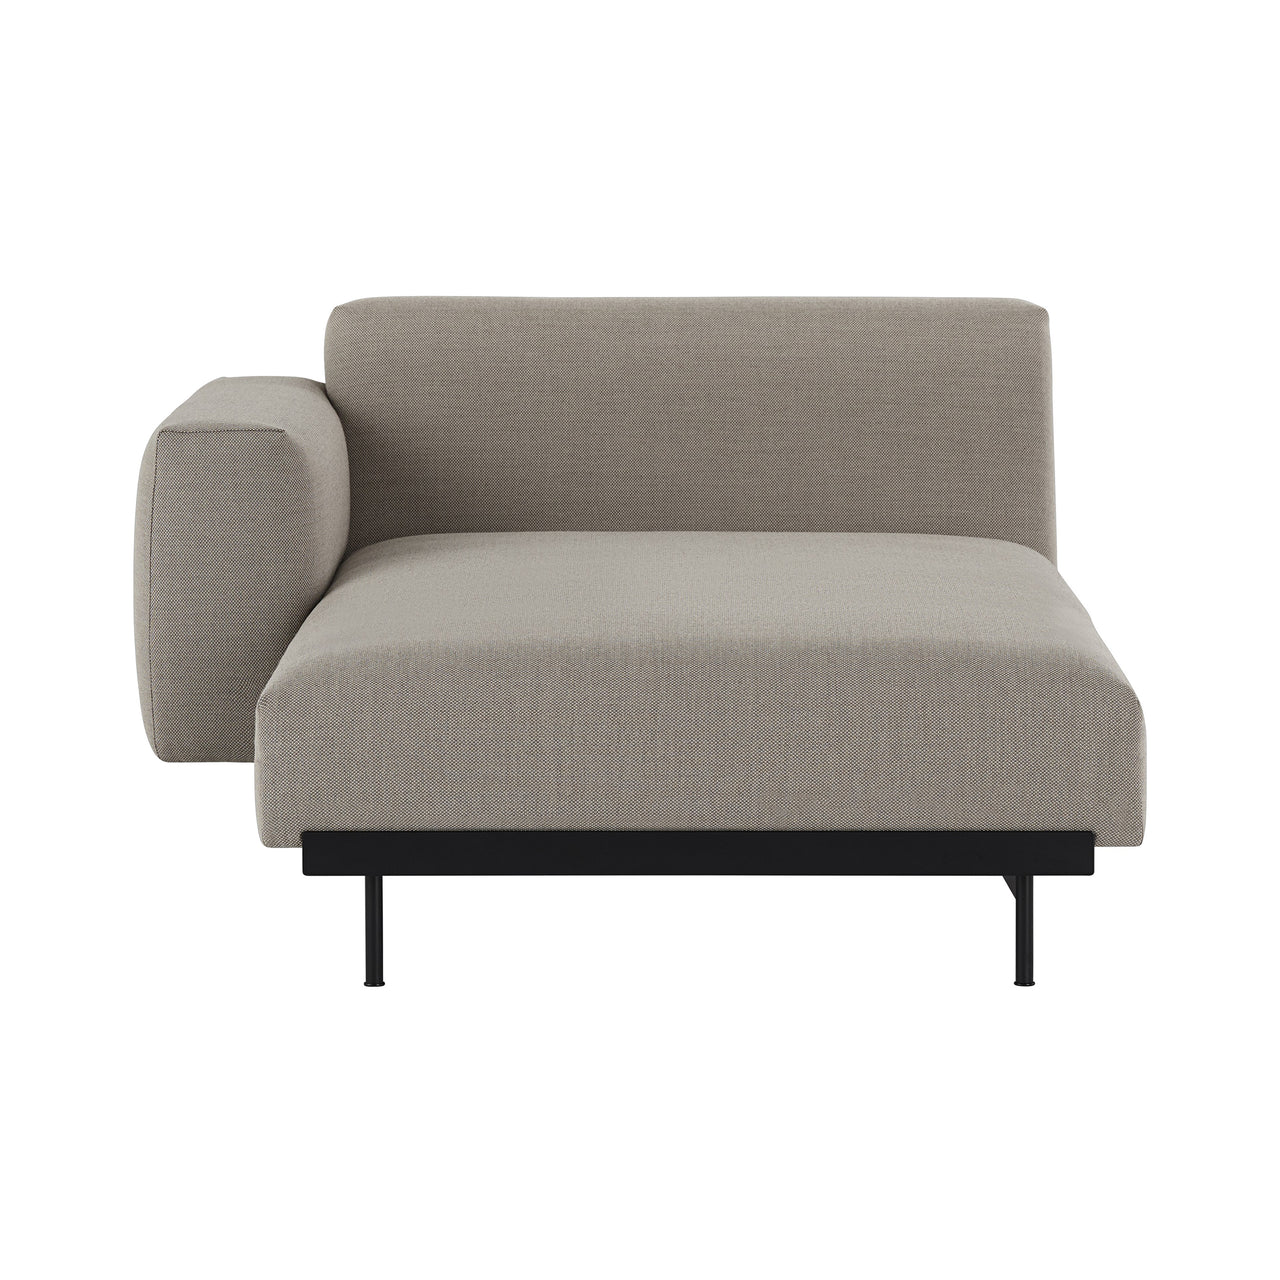 In Situ Modular Sofa: Modules + Left Armrest Lounge